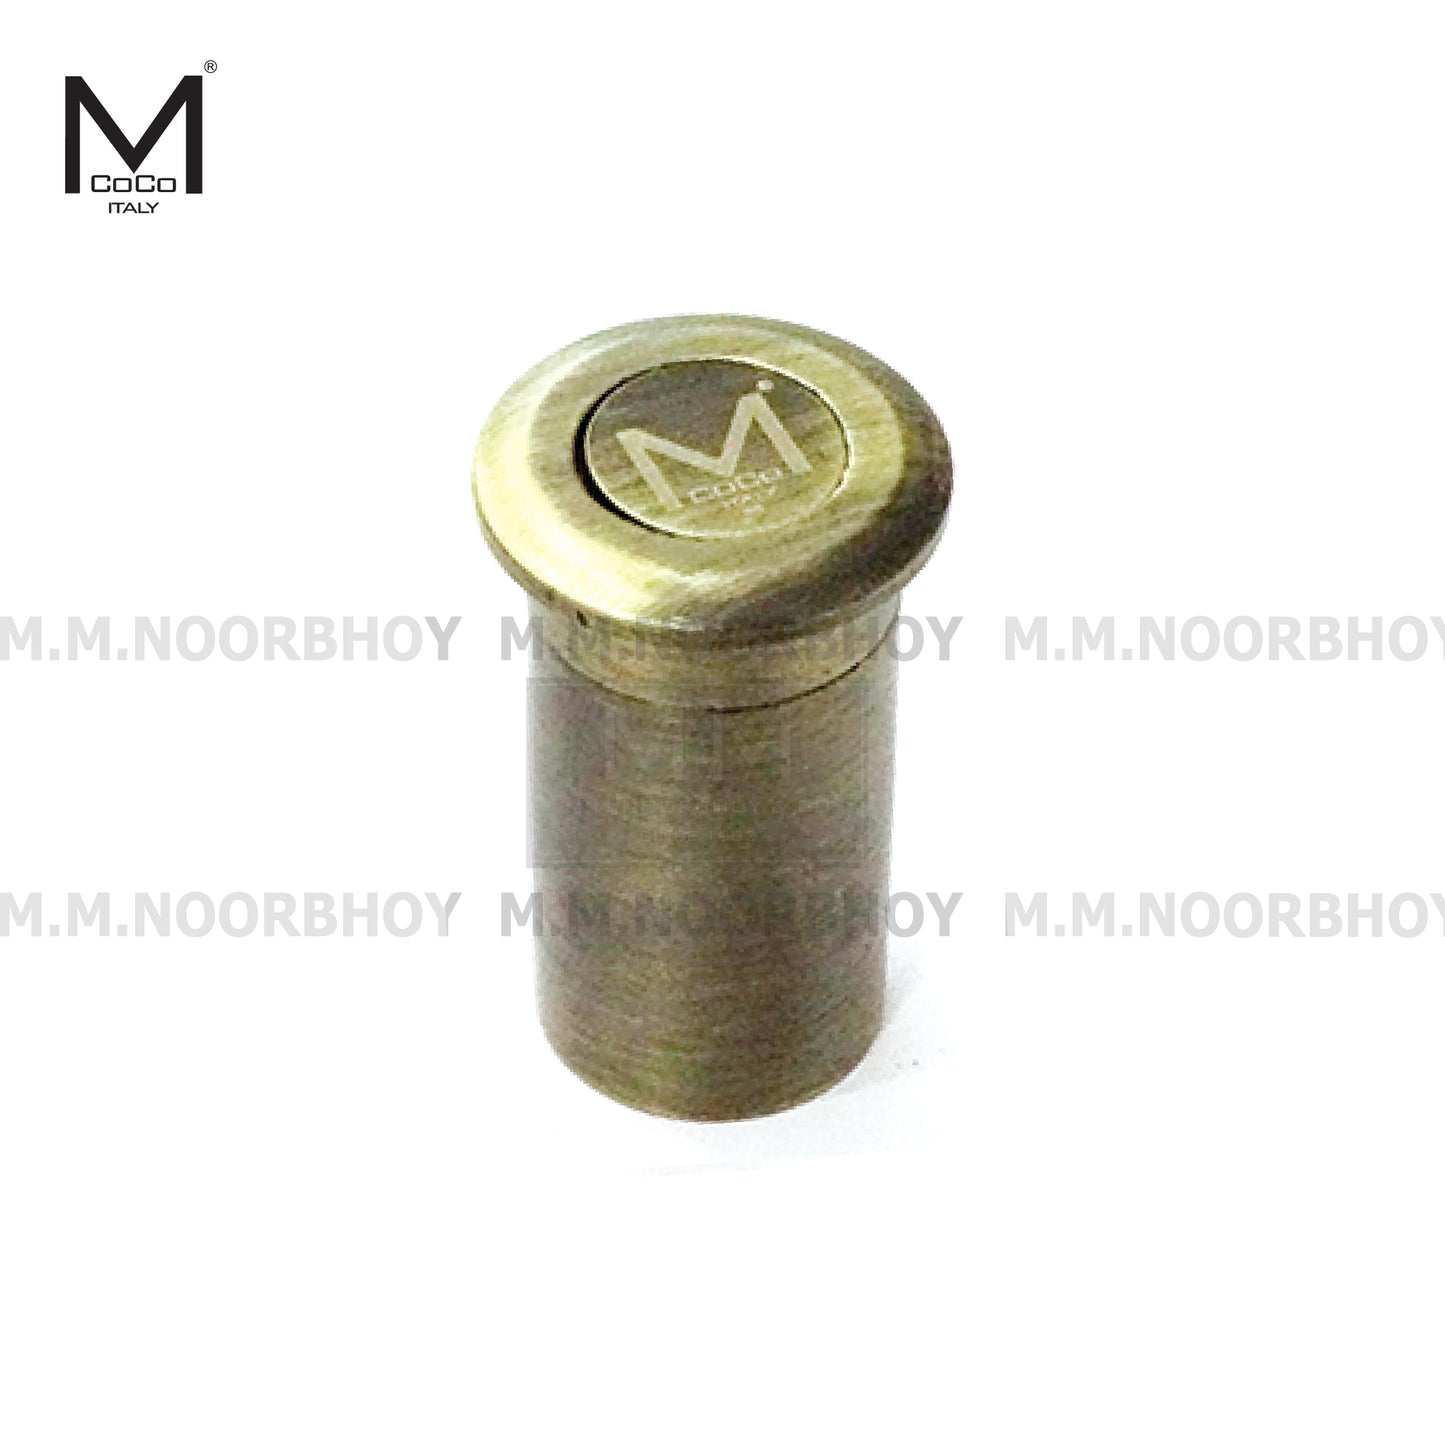 Mcoco Dust Cap Antique Brass & Satin Nickel Finish - GK680